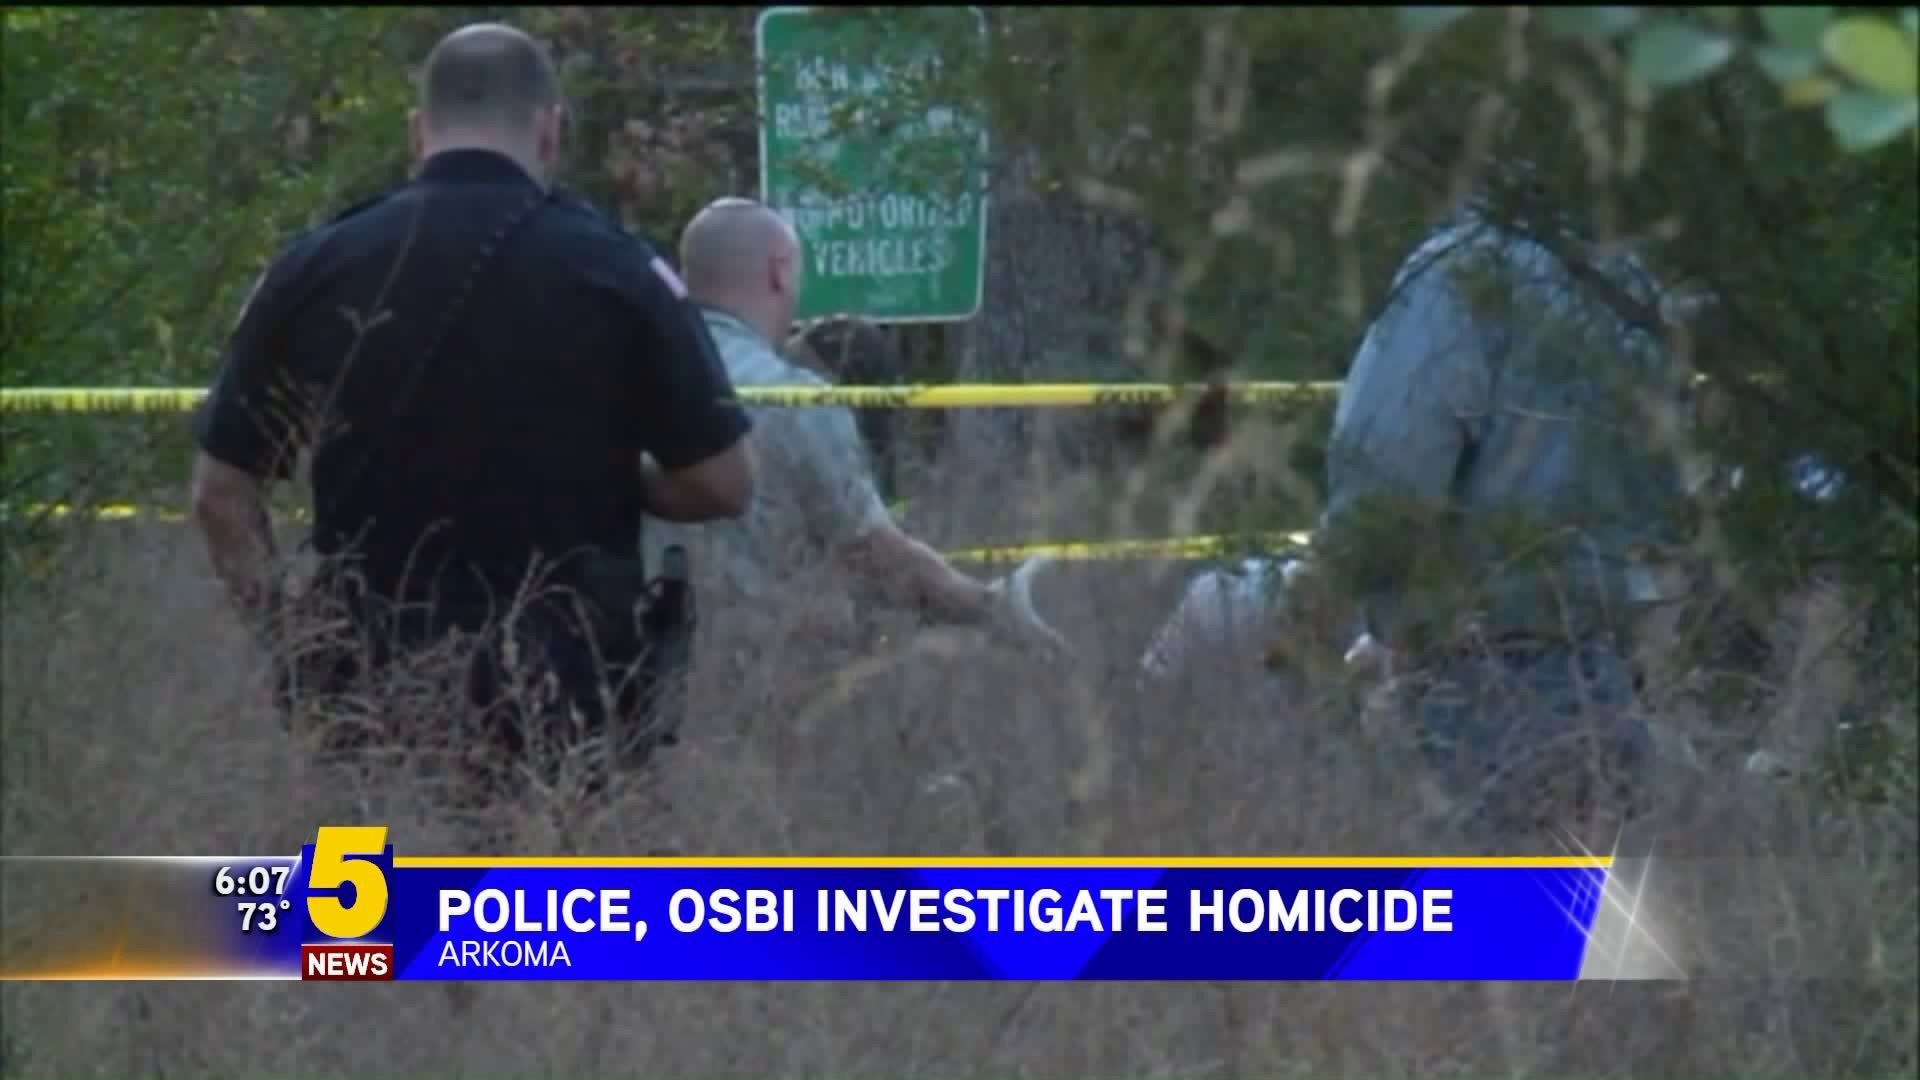 Police, OSBI Investigate Homicide